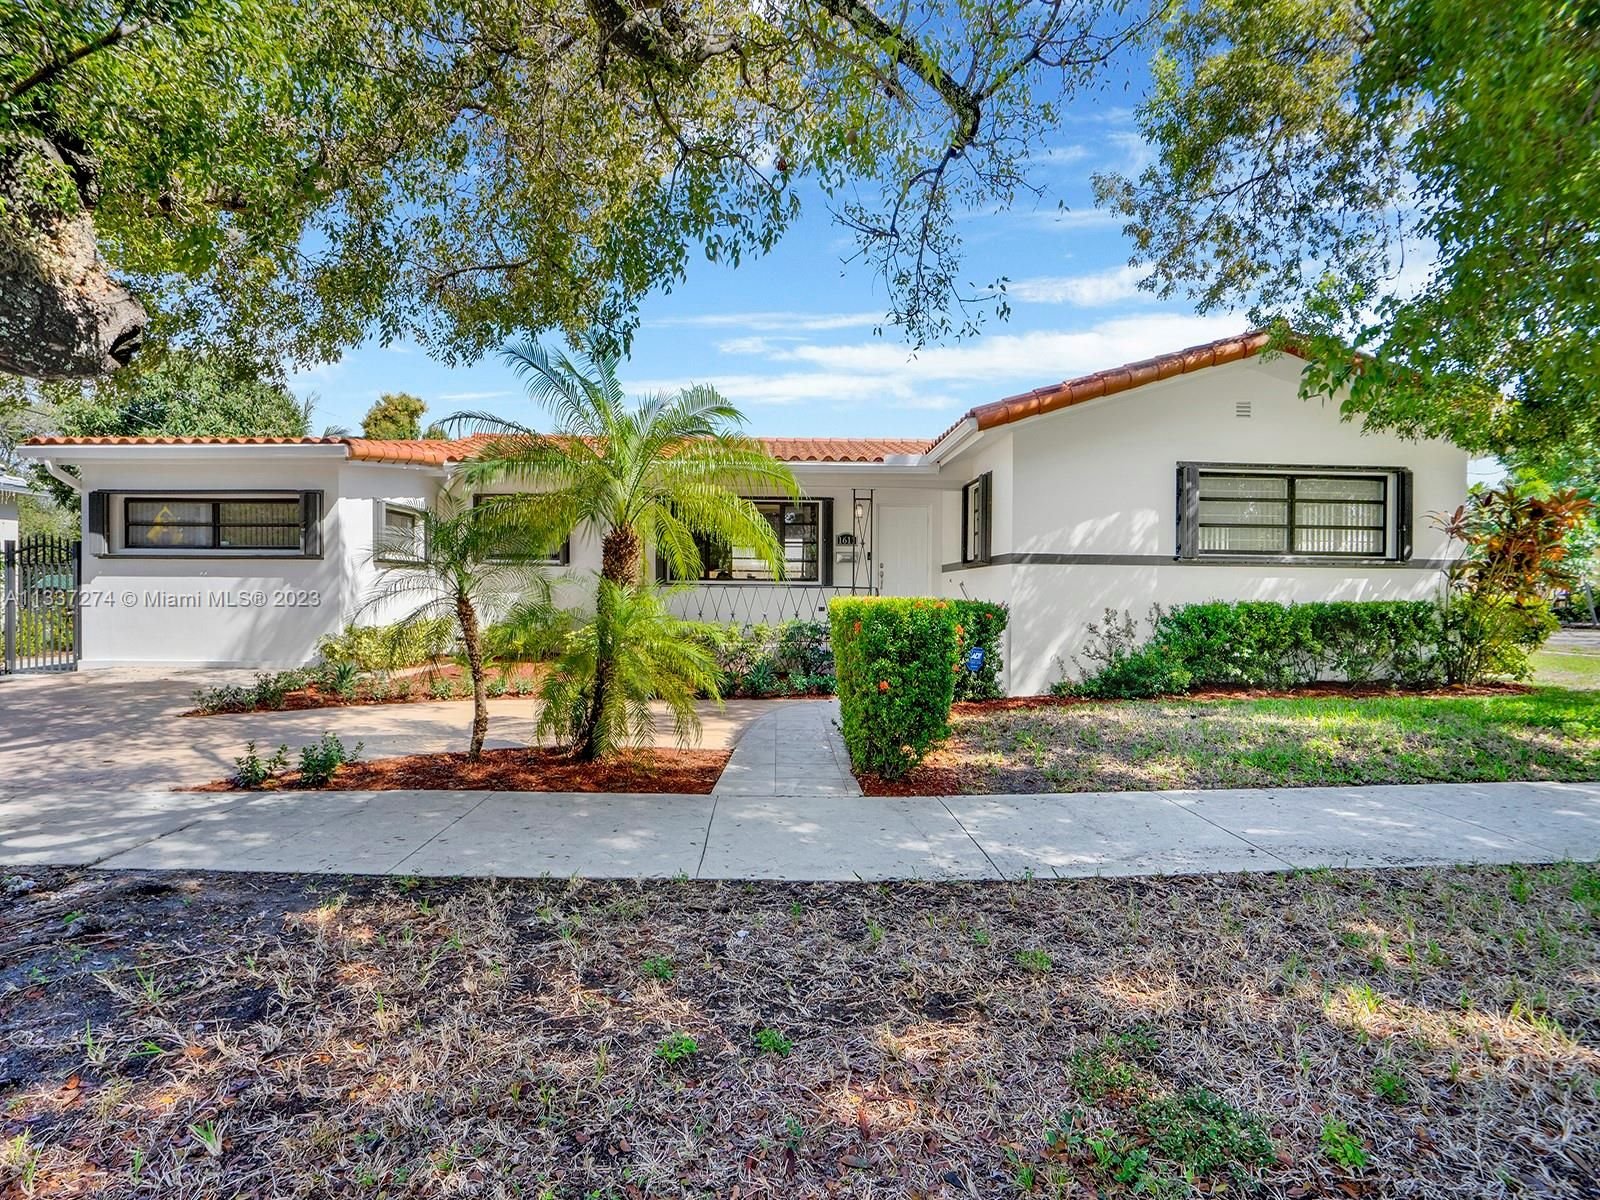 Real estate property located at 1611 16th Ave, Miami-Dade County, Miami, FL